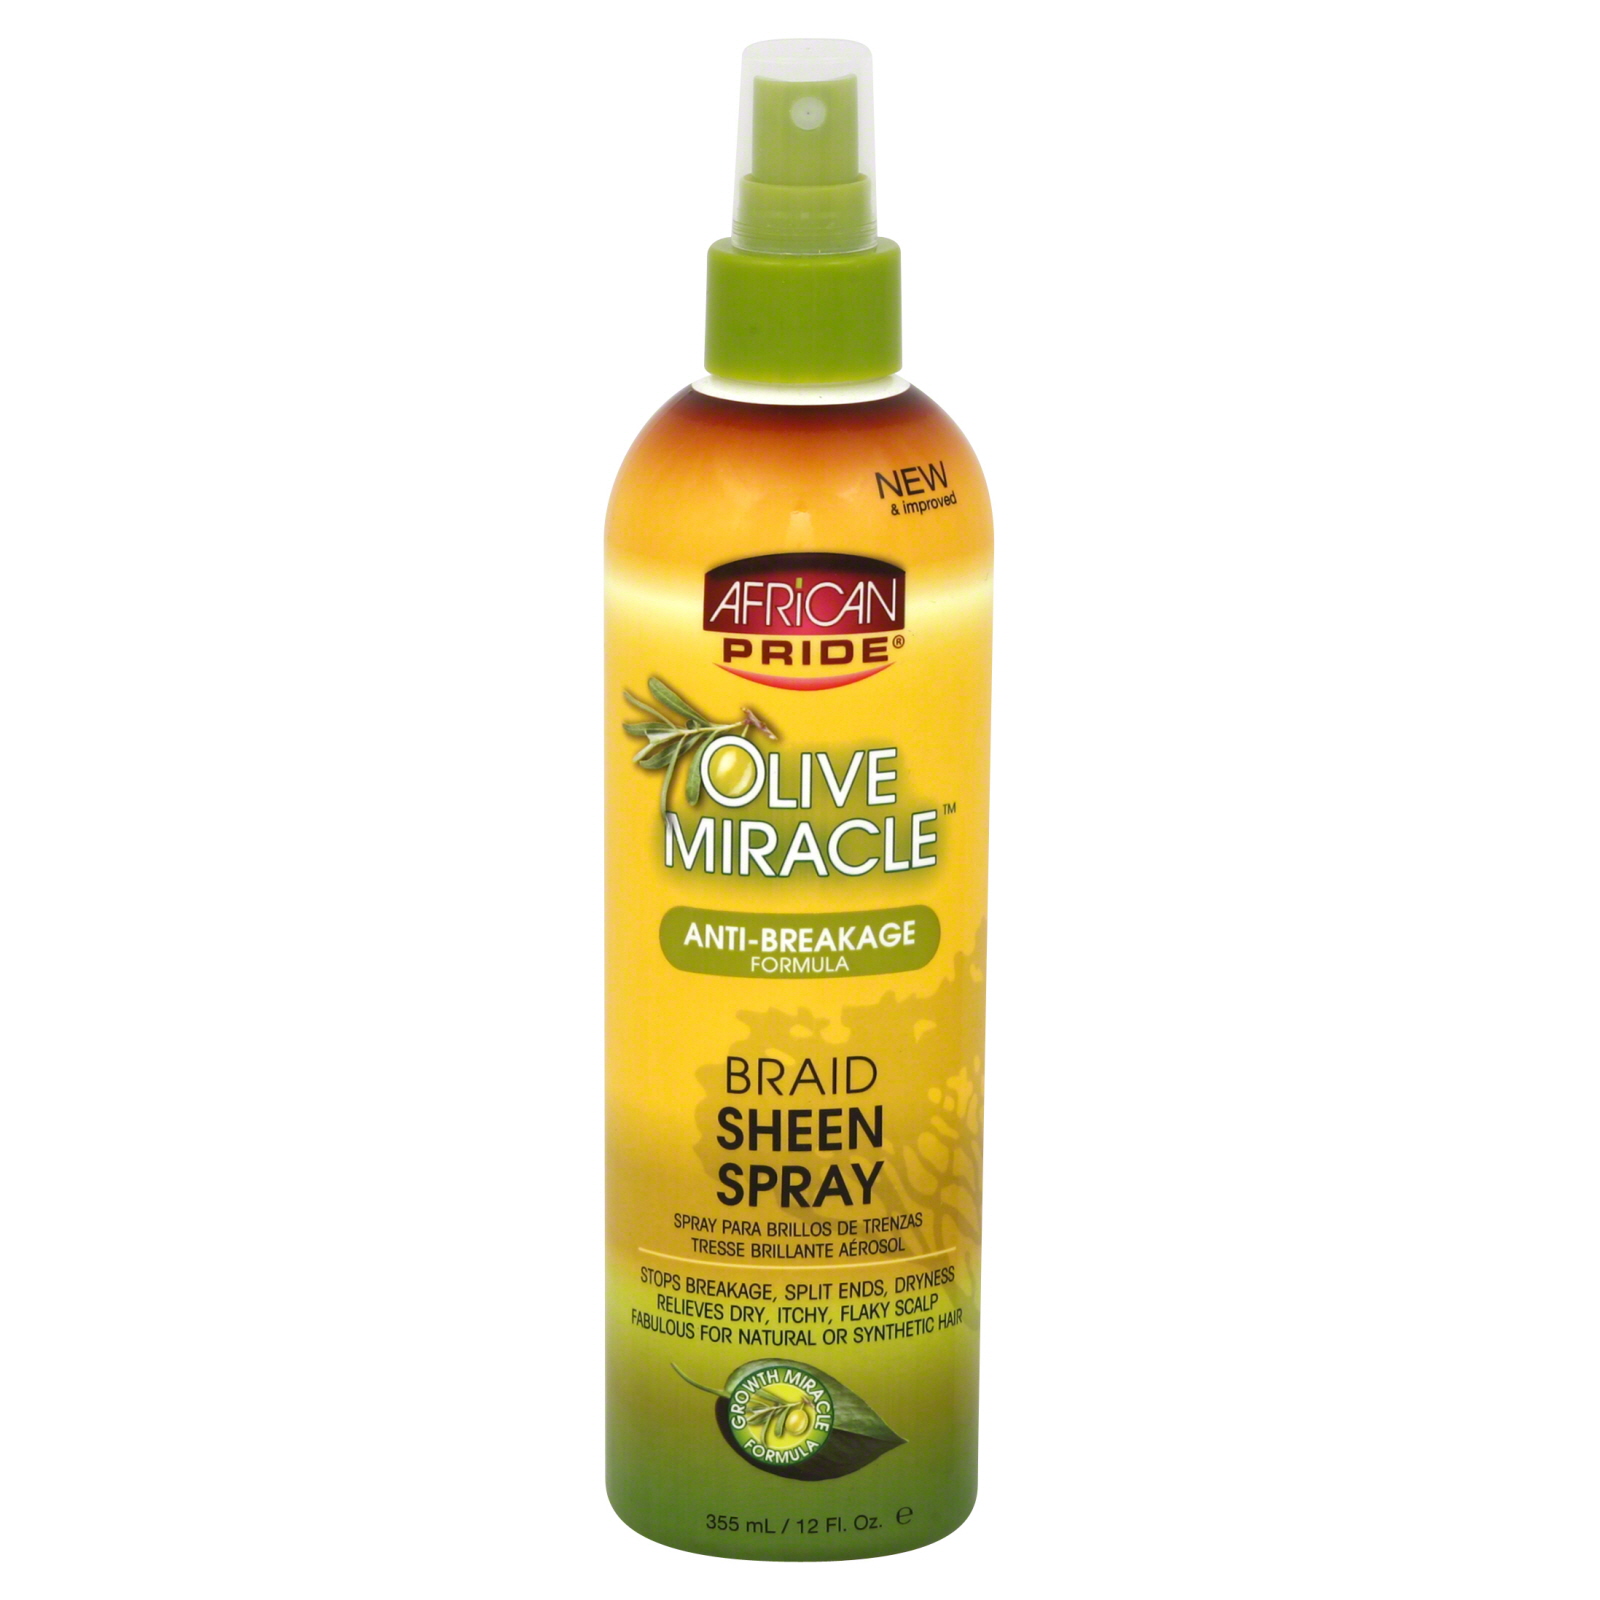 African Pride Olive Miracle Braid Sheen Spray, 12 fl oz (355 ml)